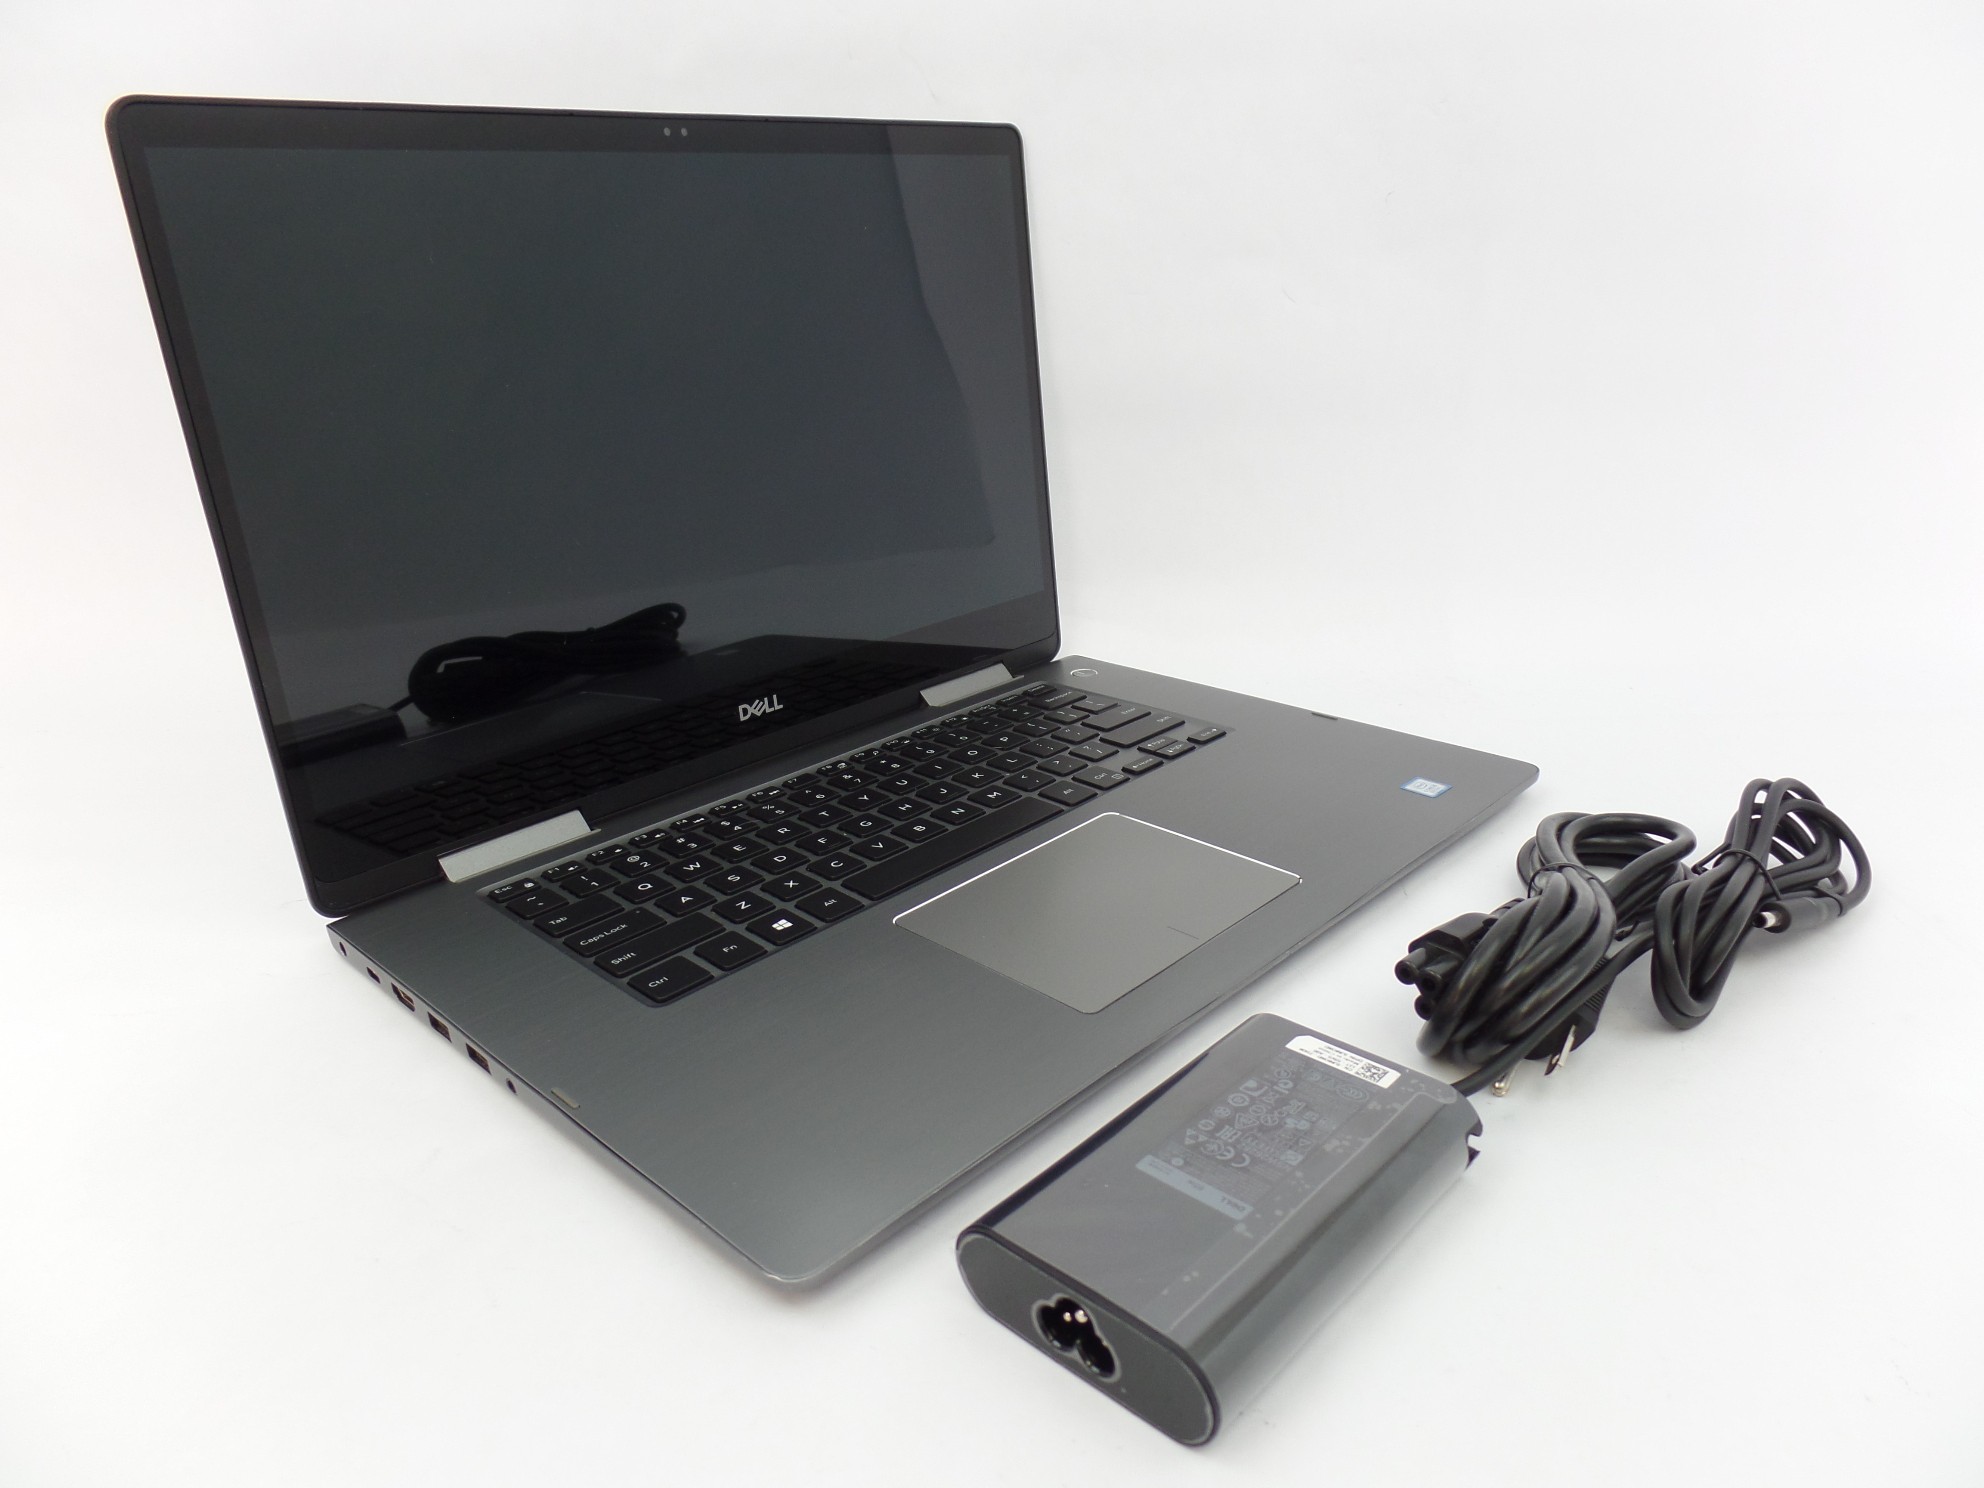 Dell Inspiron 7573 15.6" FHD Touch i7-8550U 1.8GHz 12GB 2TB HDD W10H Laptop